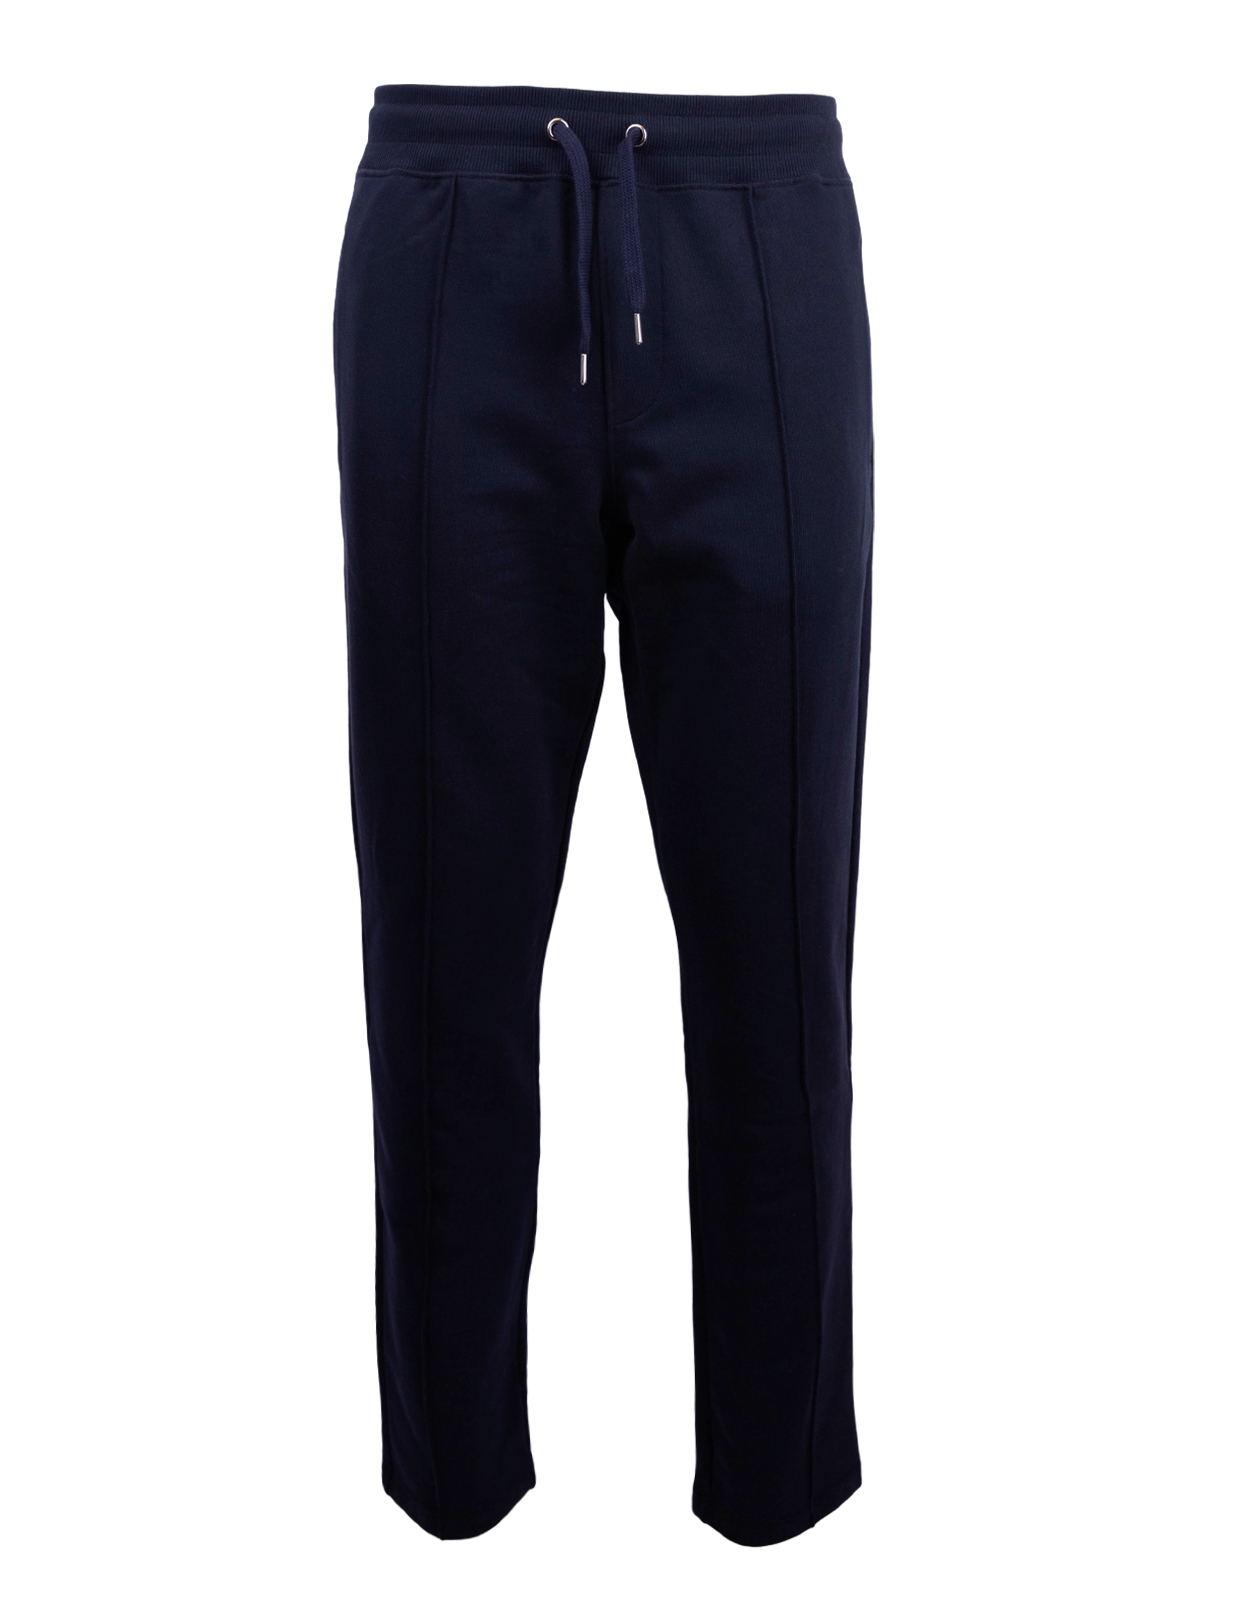 Loungewear Cotton Trousers Navy Stl M